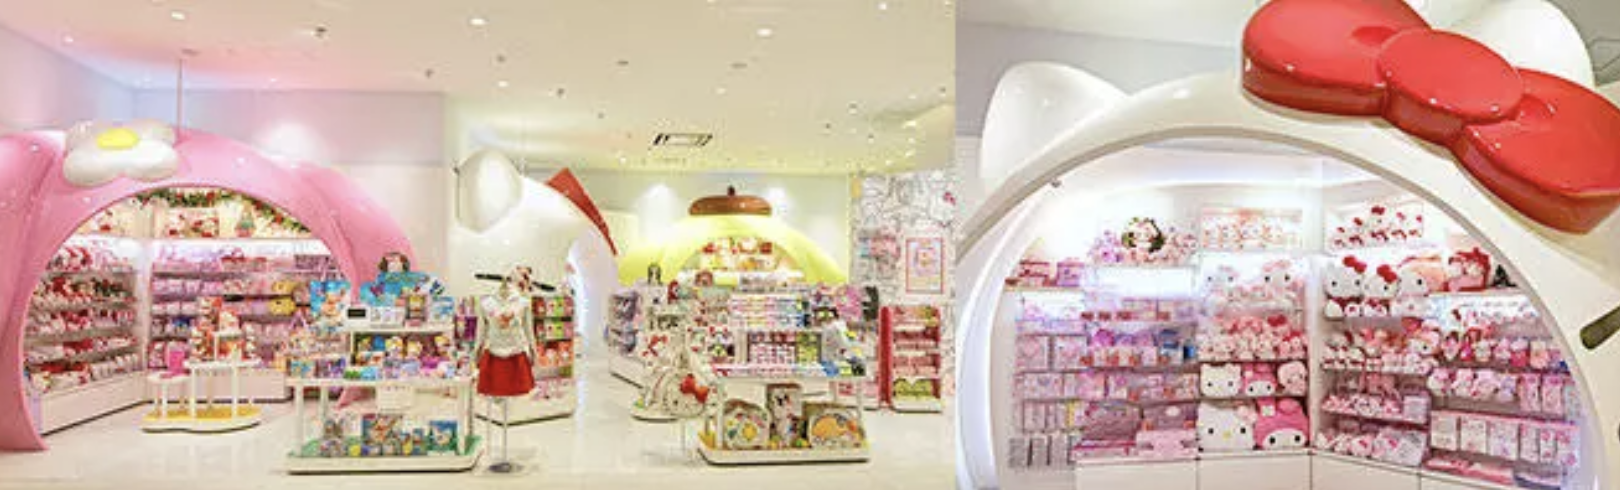 Sanrio Store Image